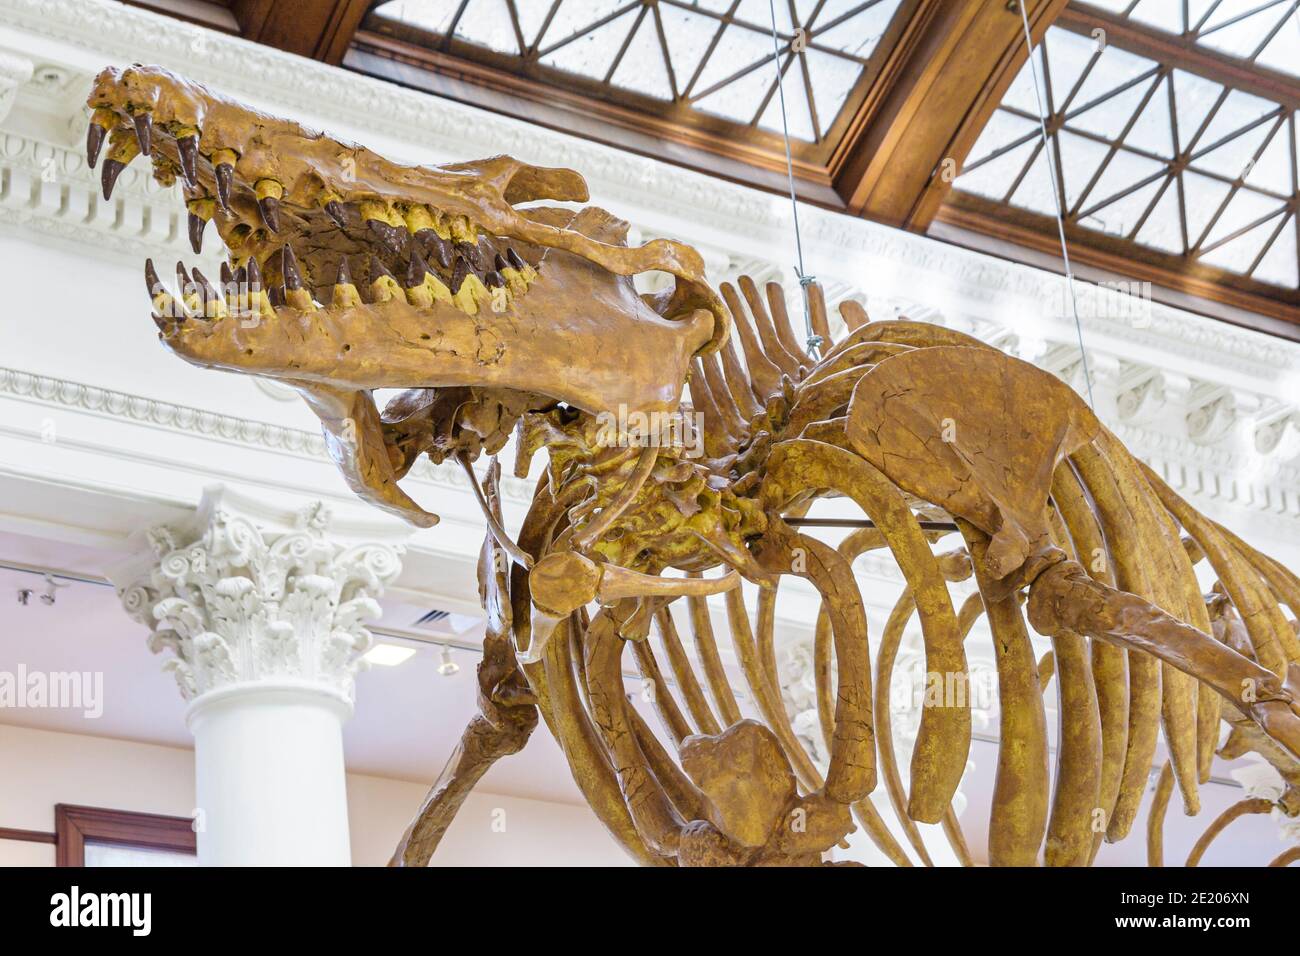 Tuscaloosa Alabama,University of Alabama Museum of Natural History,whale fossil jaw teeth, Stock Photo